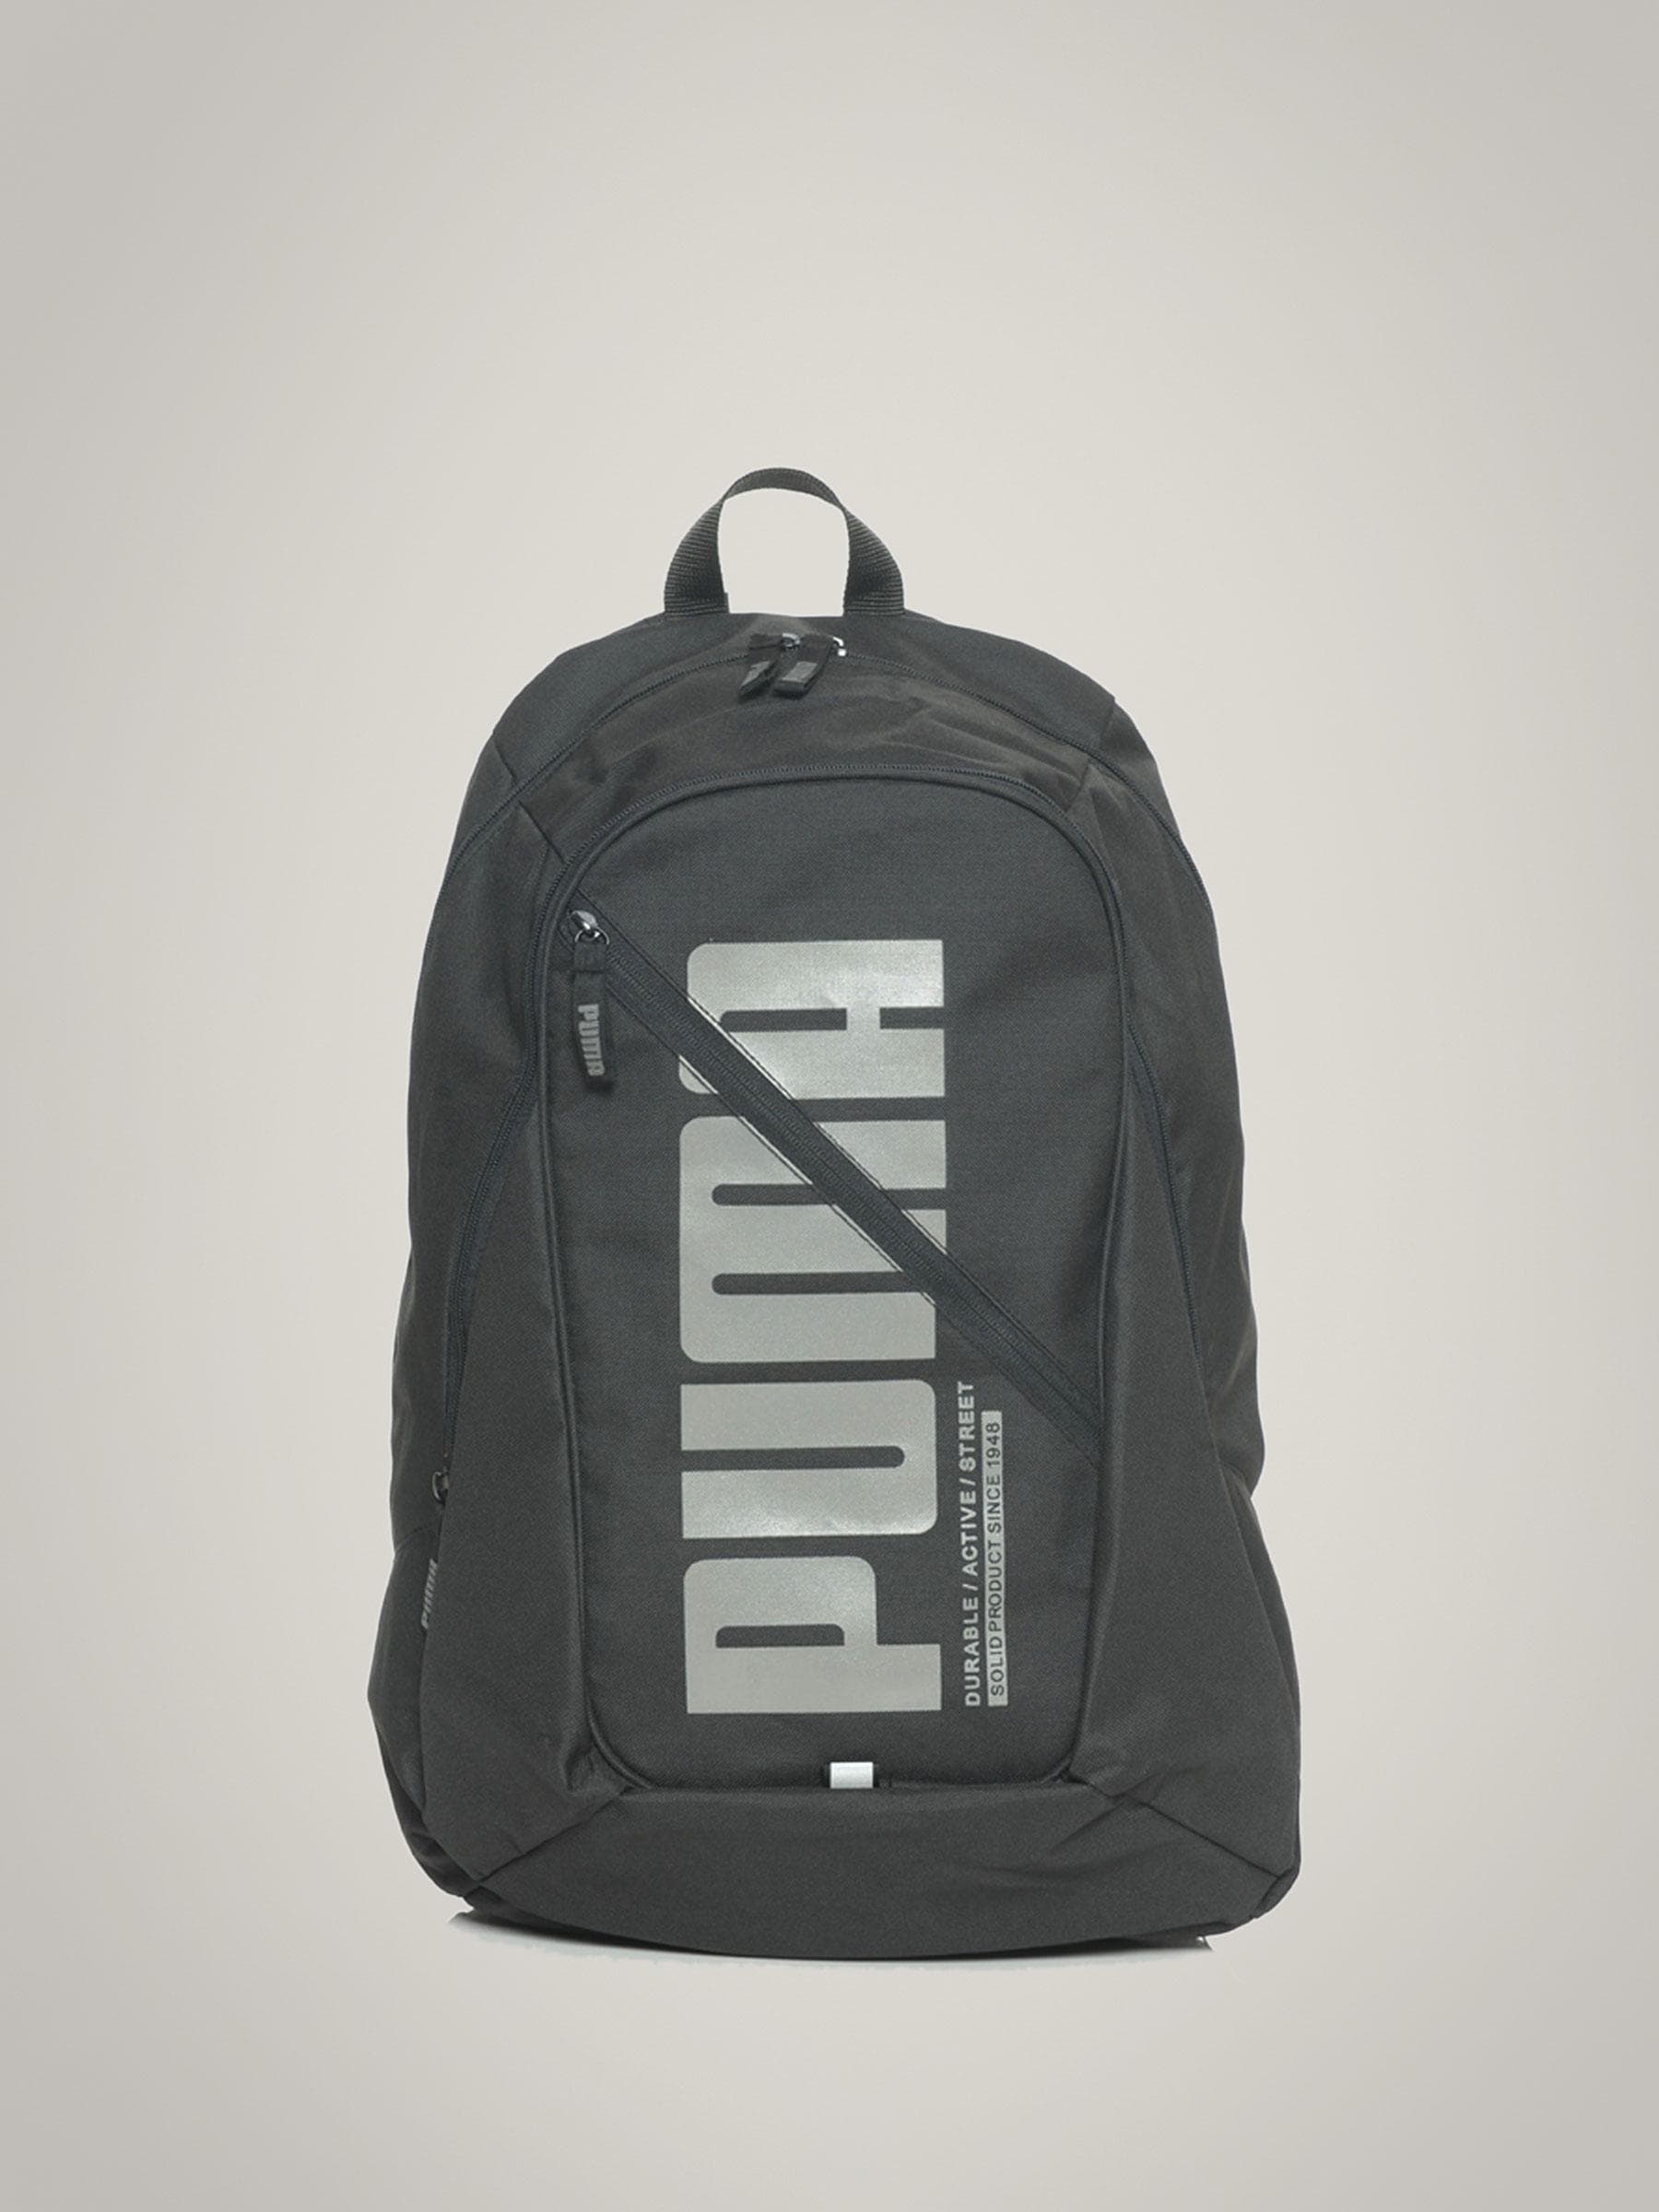 Puma Deck Black Backpack